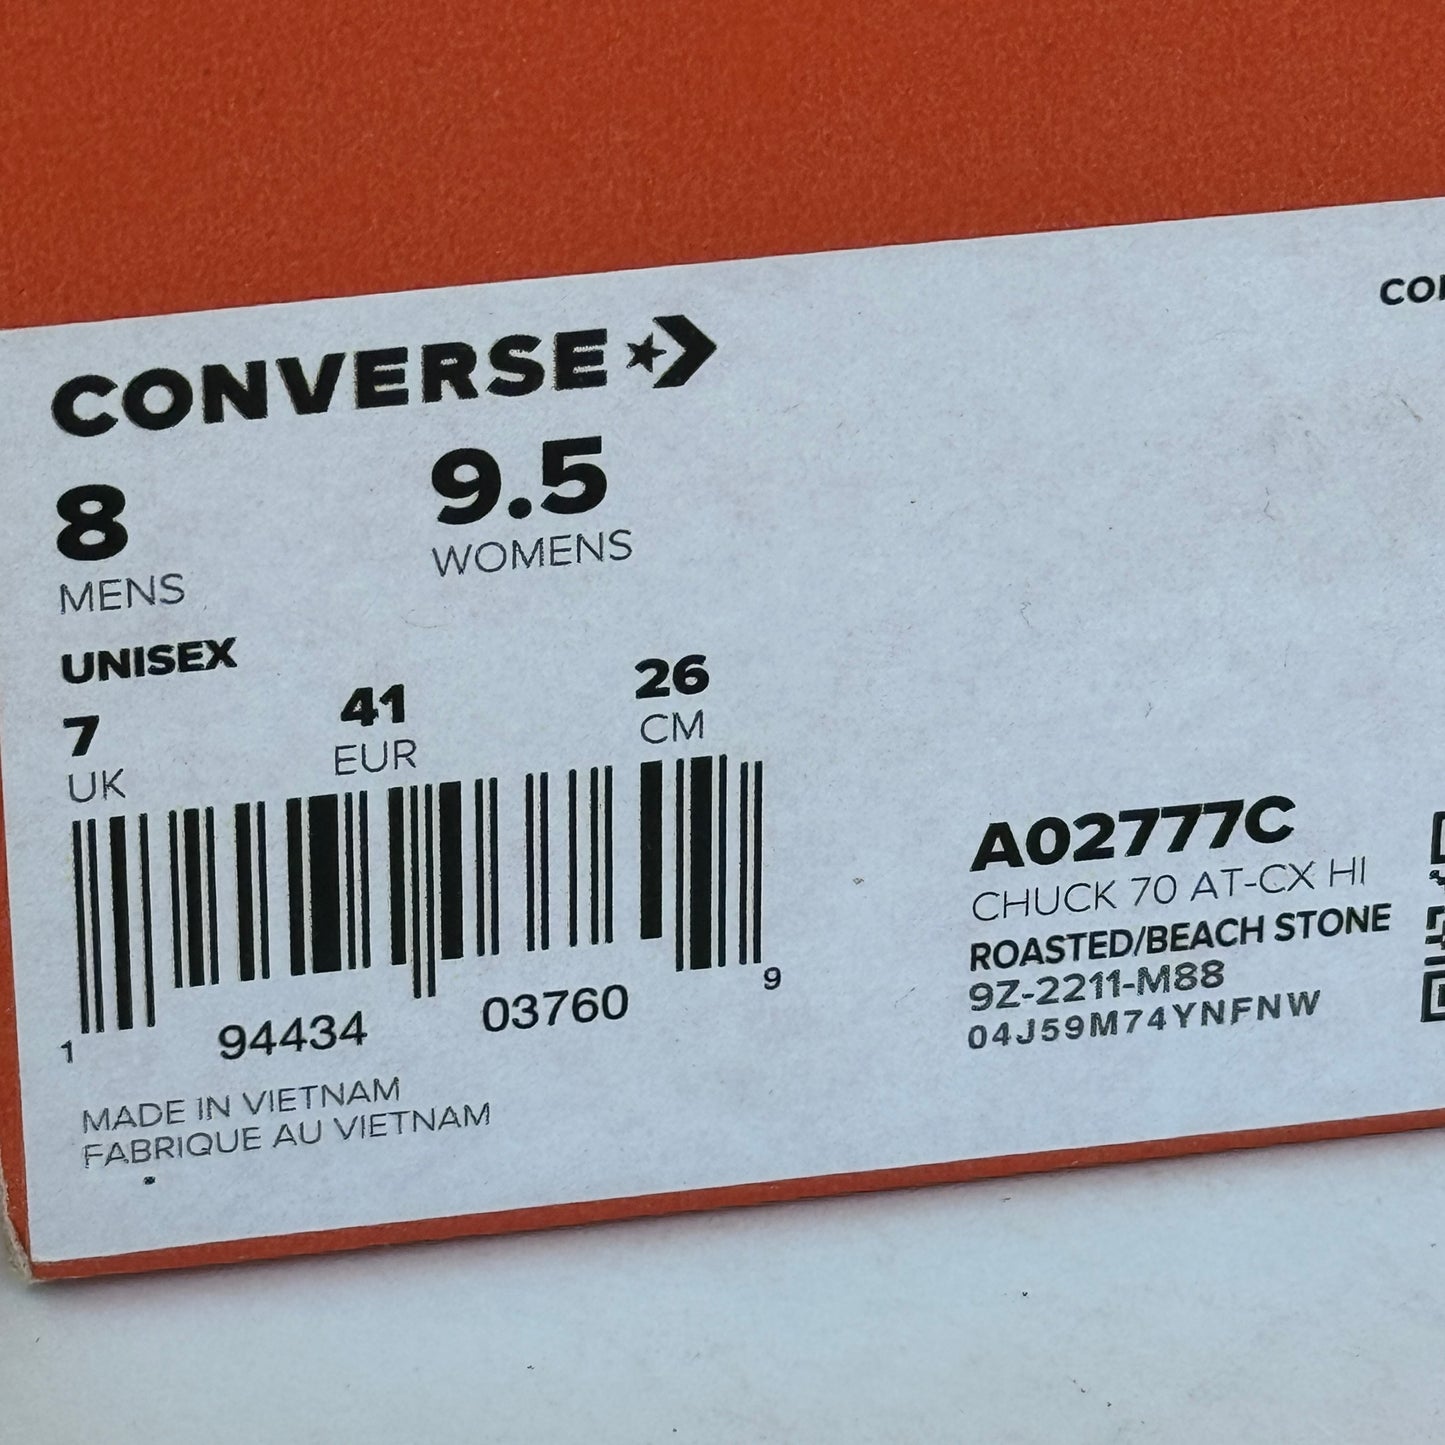 Converse Chuck Taylor 70 AT CX HI Platform high top sneakers beige natural